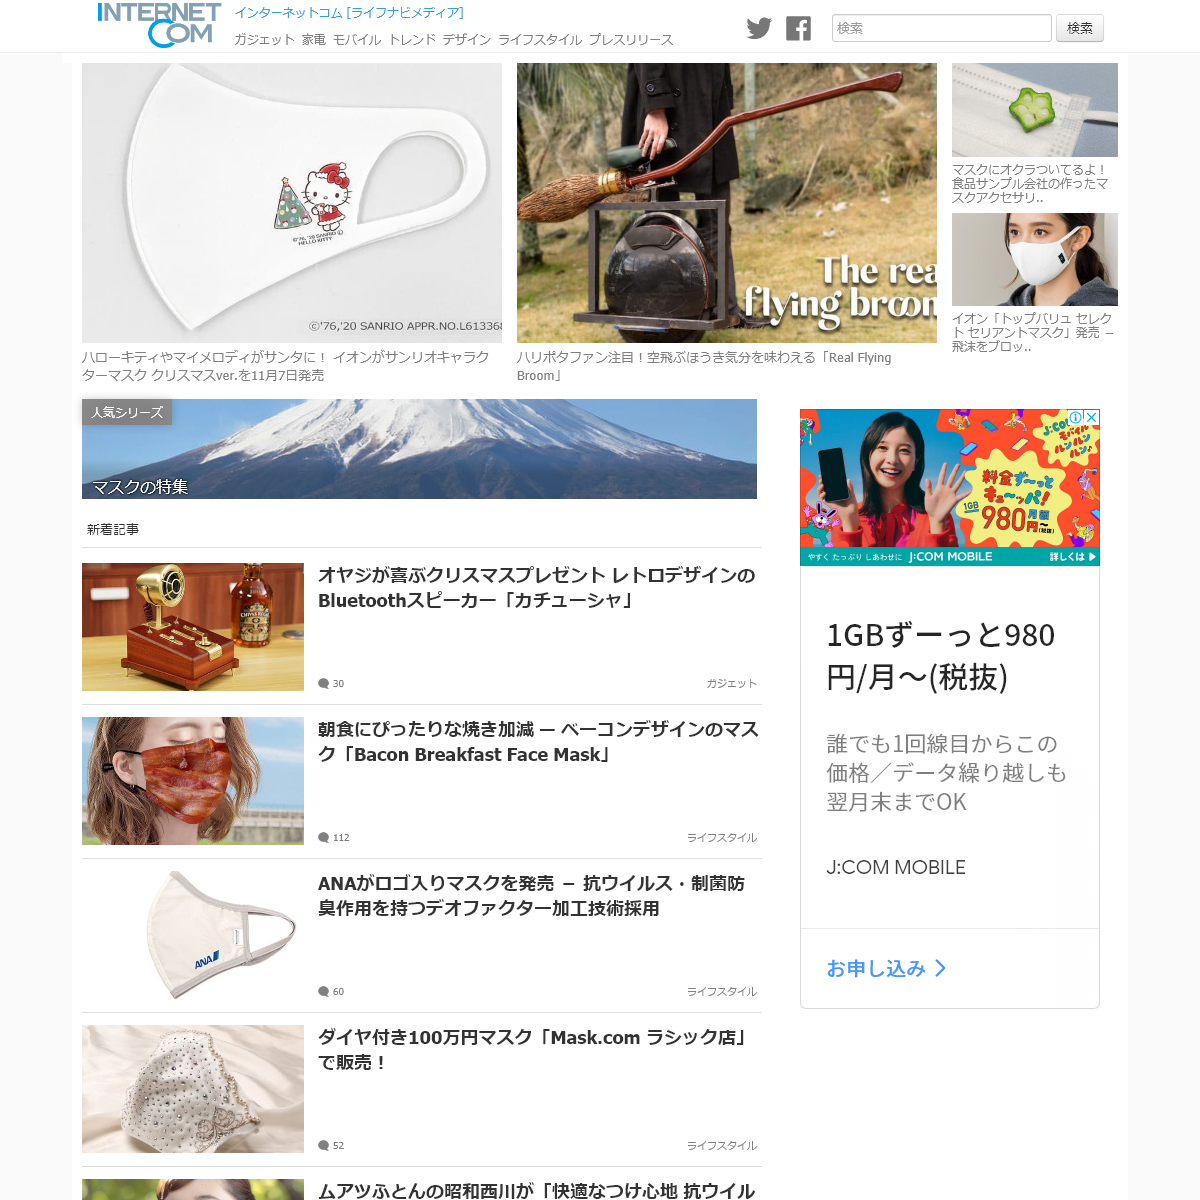 A complete backup of internetcom.jp